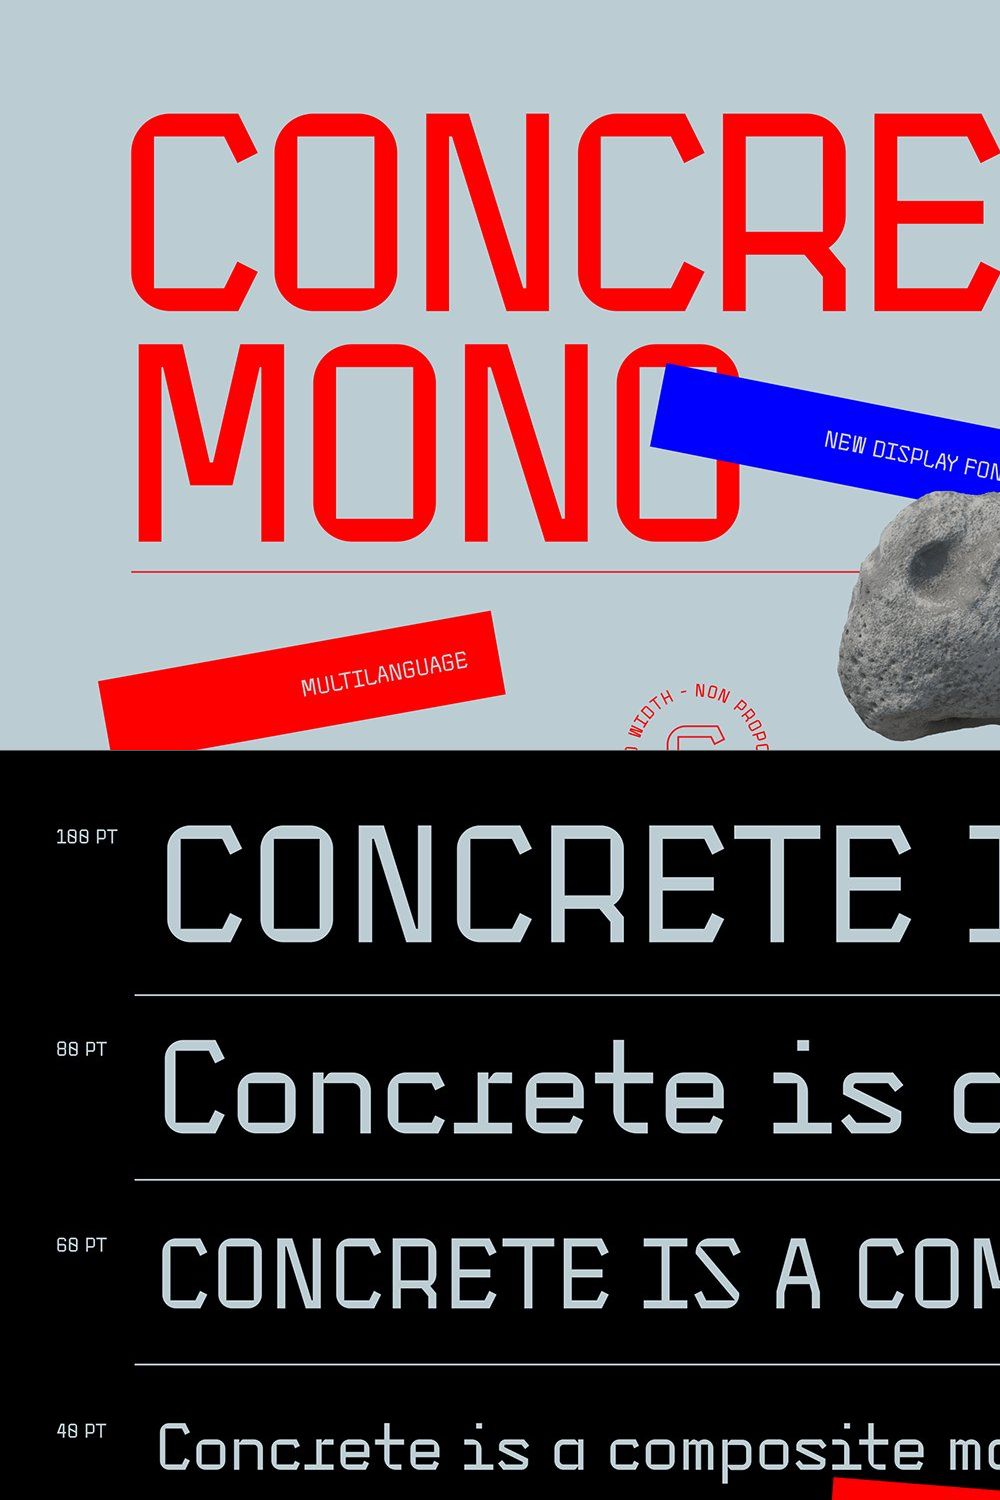 IF Concreto Mono pinterest preview image.